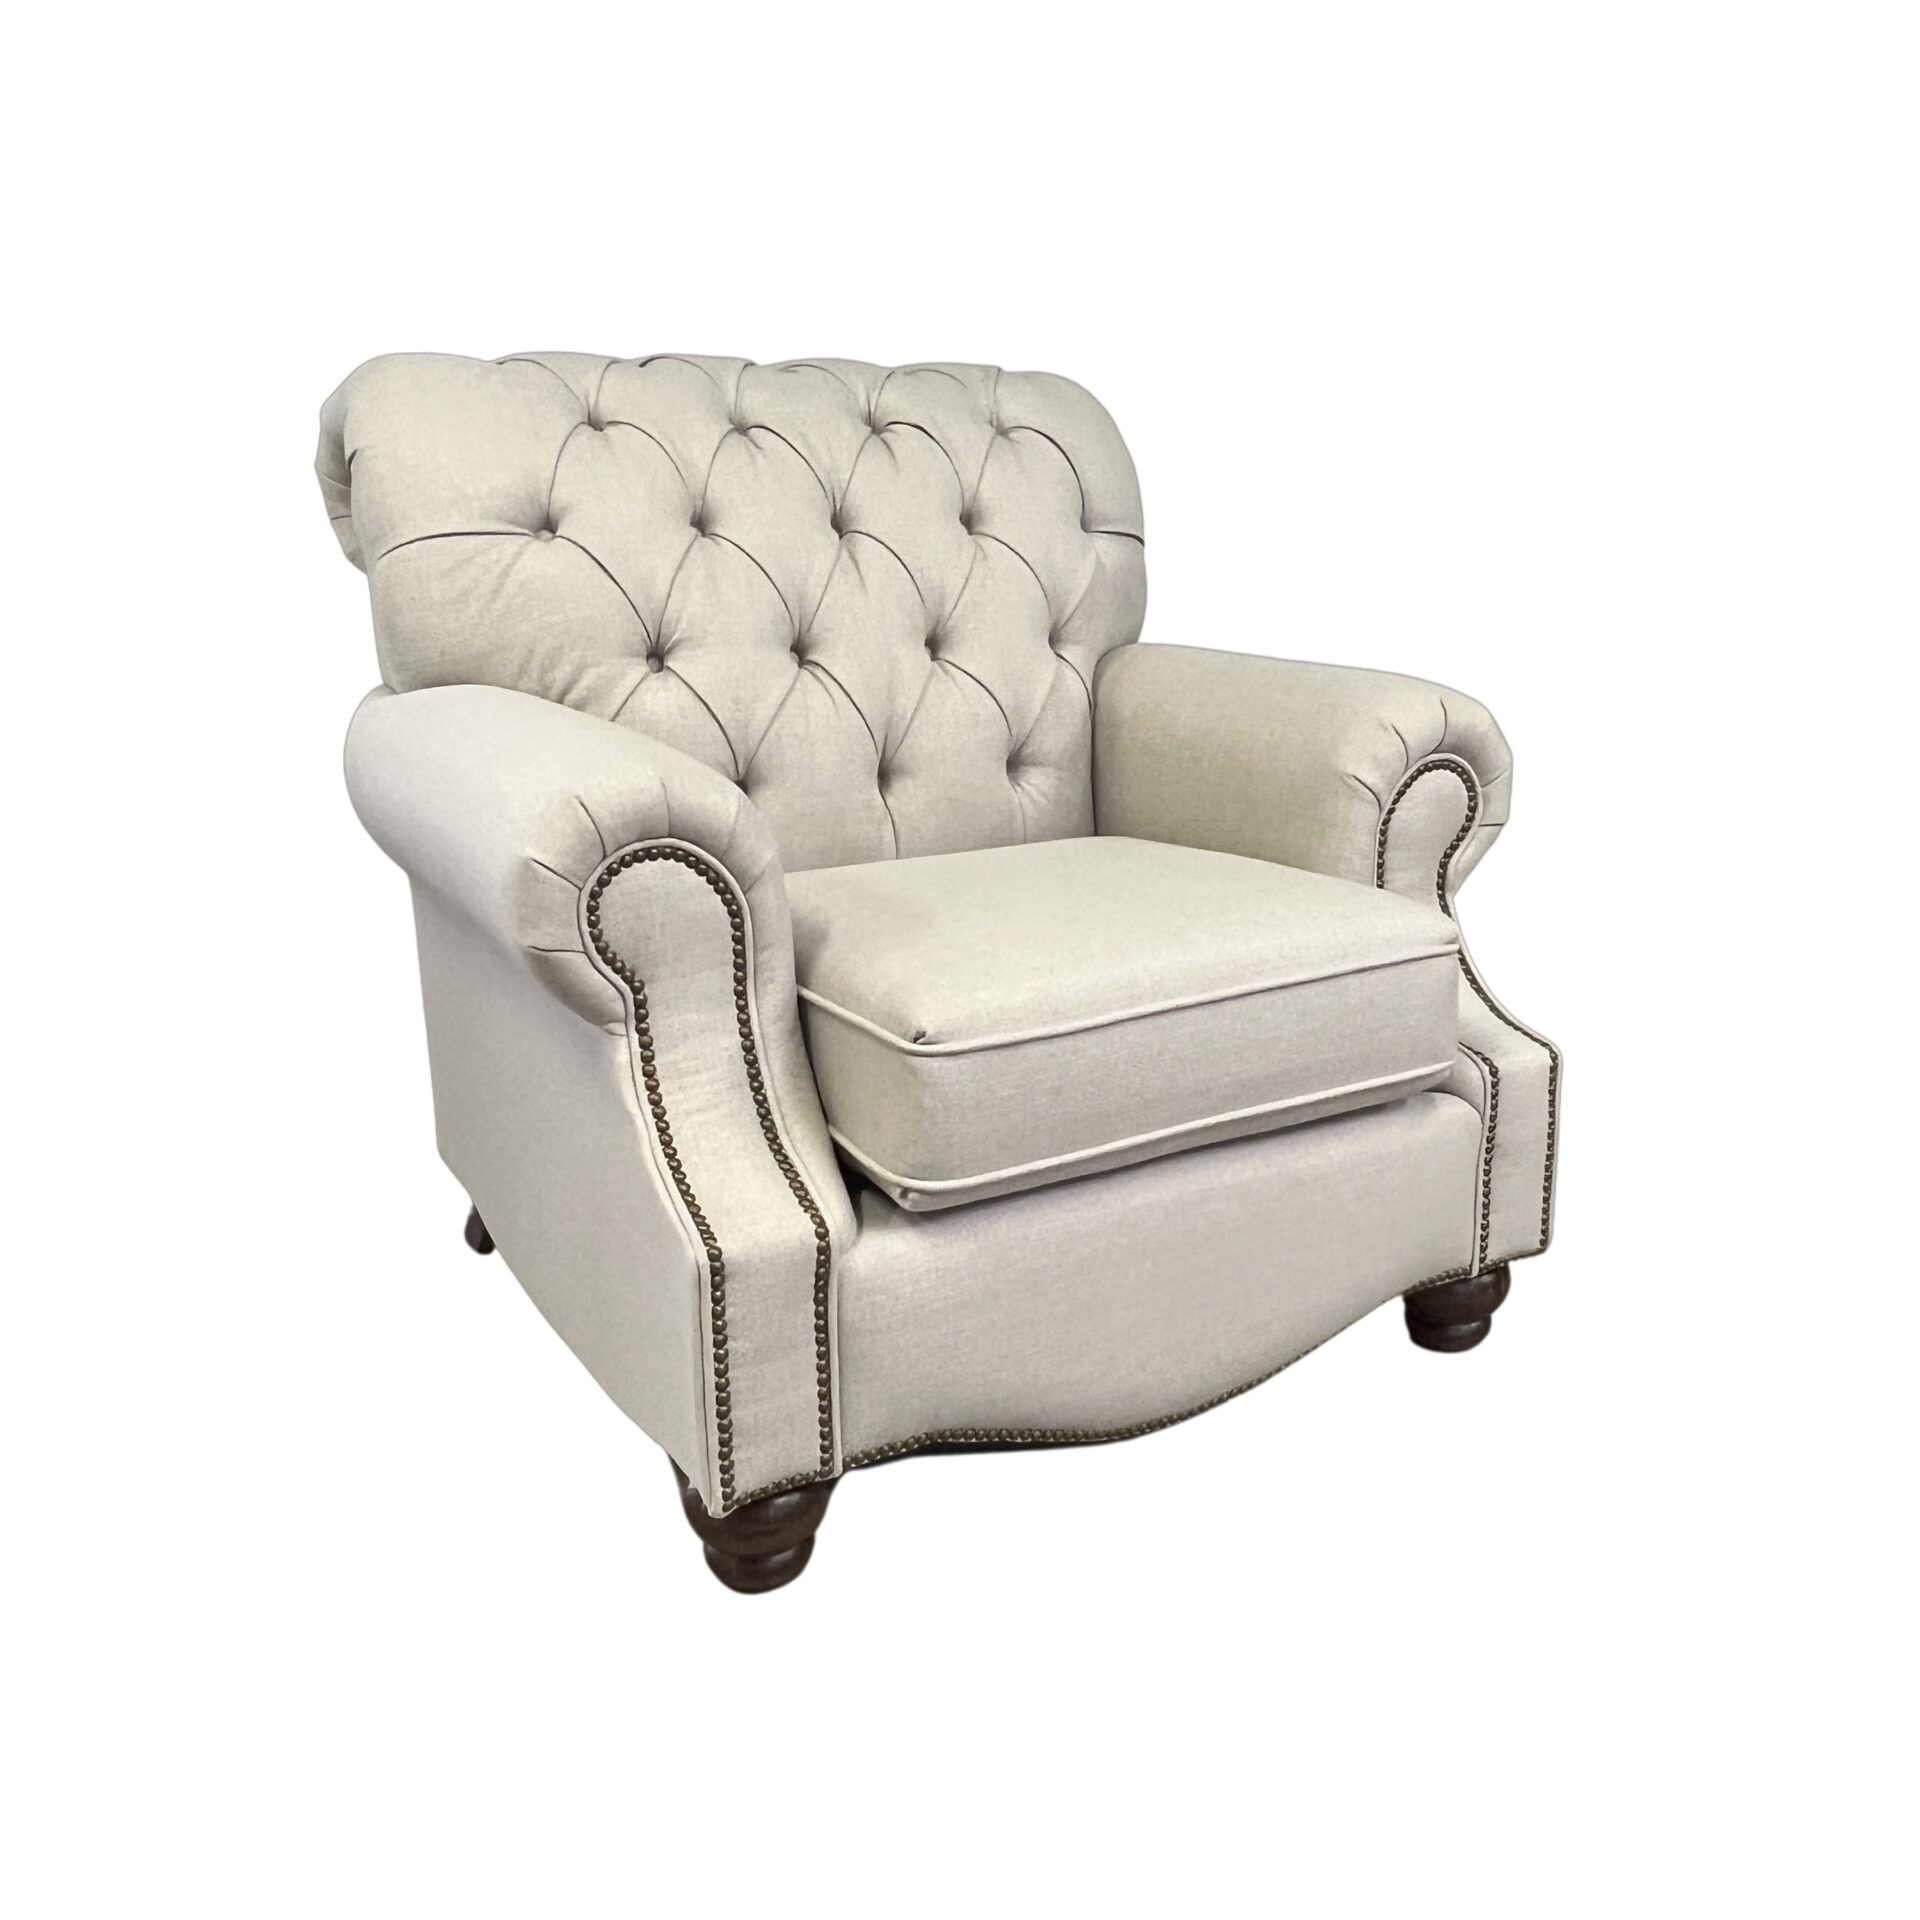 CARINA-upholstered-chair-luxury-furniture-blend-home-furnishings